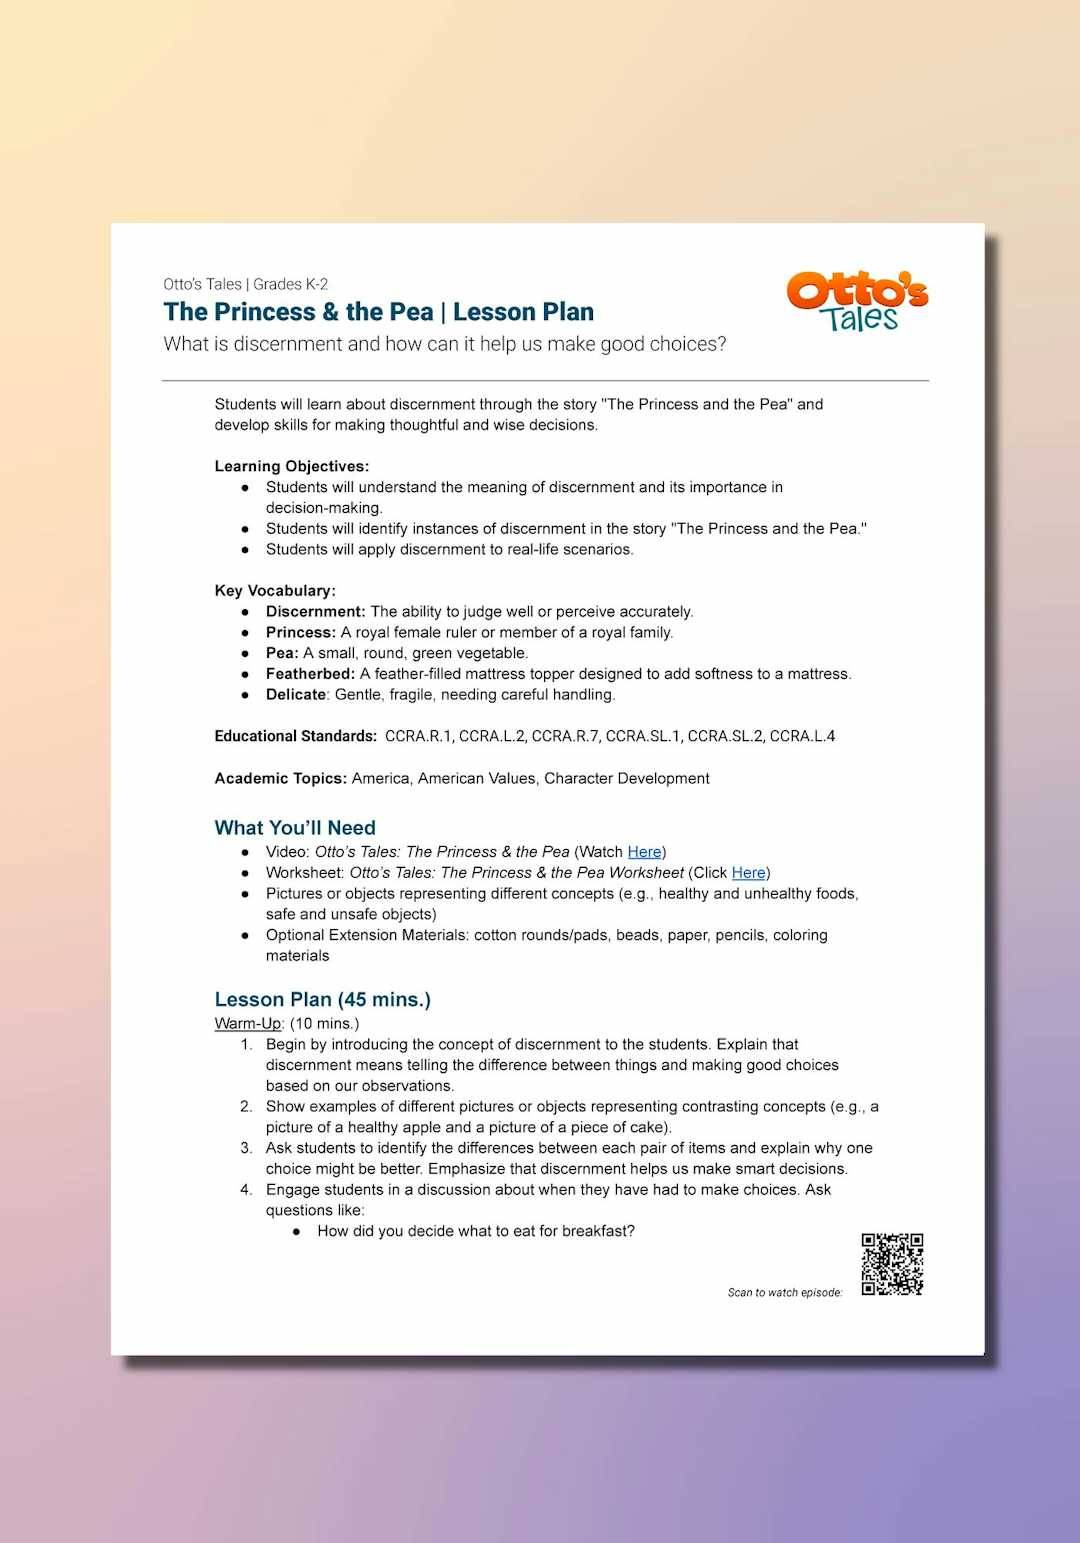 "Otto's Tales: The Princess & the Pea" Lesson Plan